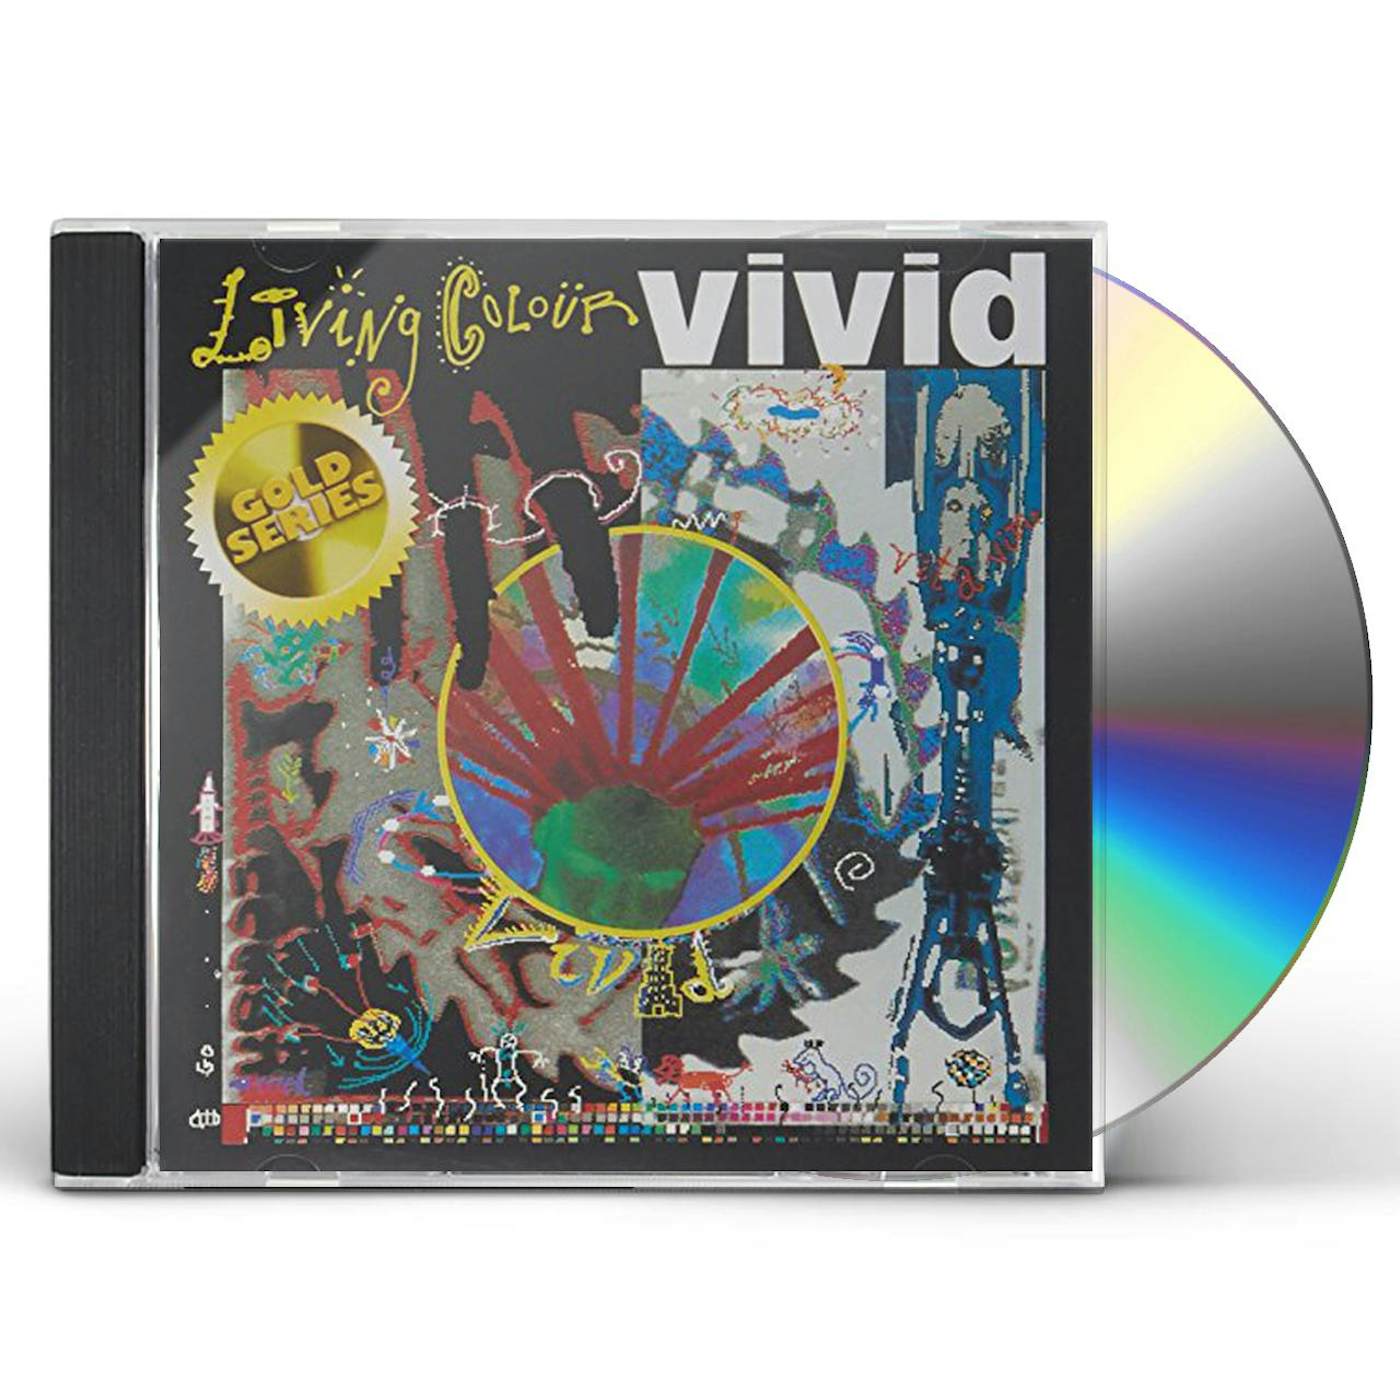 Living Colour VIVID (GOLD SERIES) CD